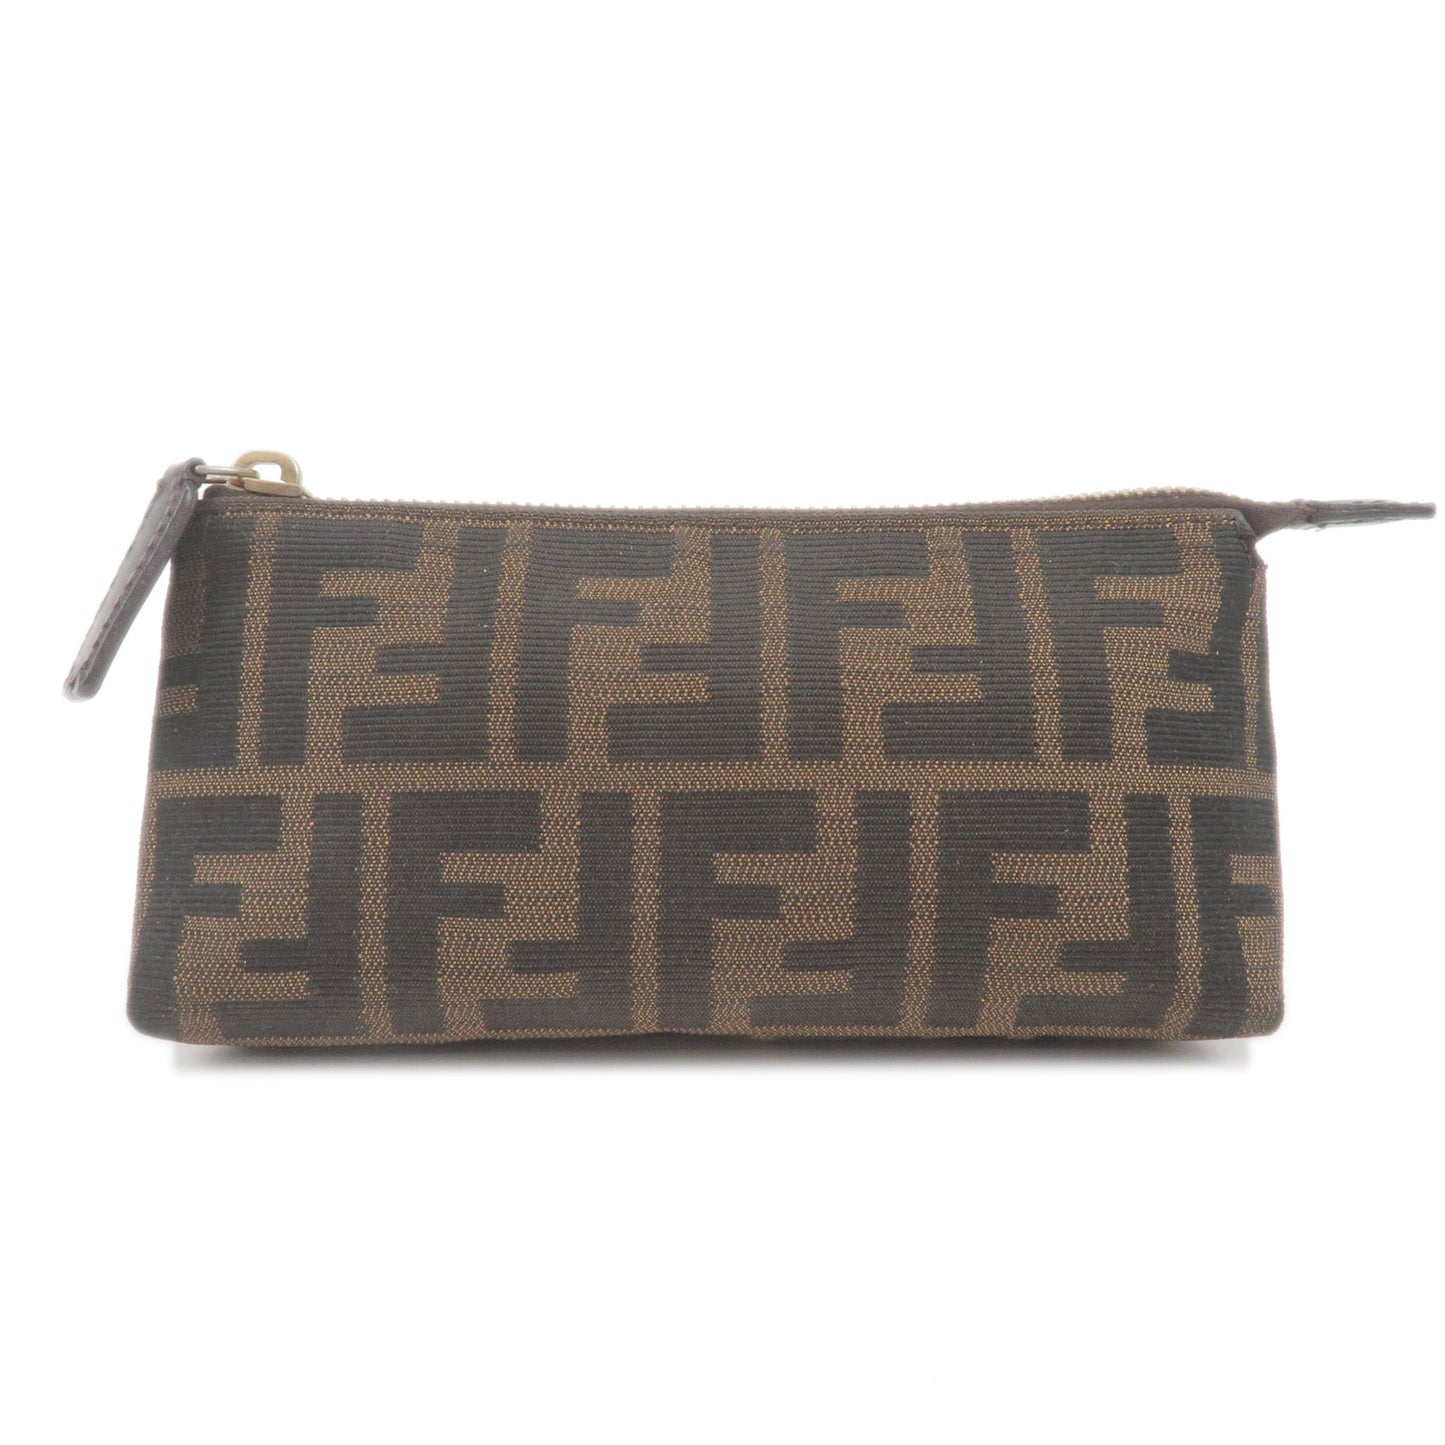 FENDI-Zucca-Canvas-Leather-Pouch-Mini-Bag-Khaki-Brown-7N0037